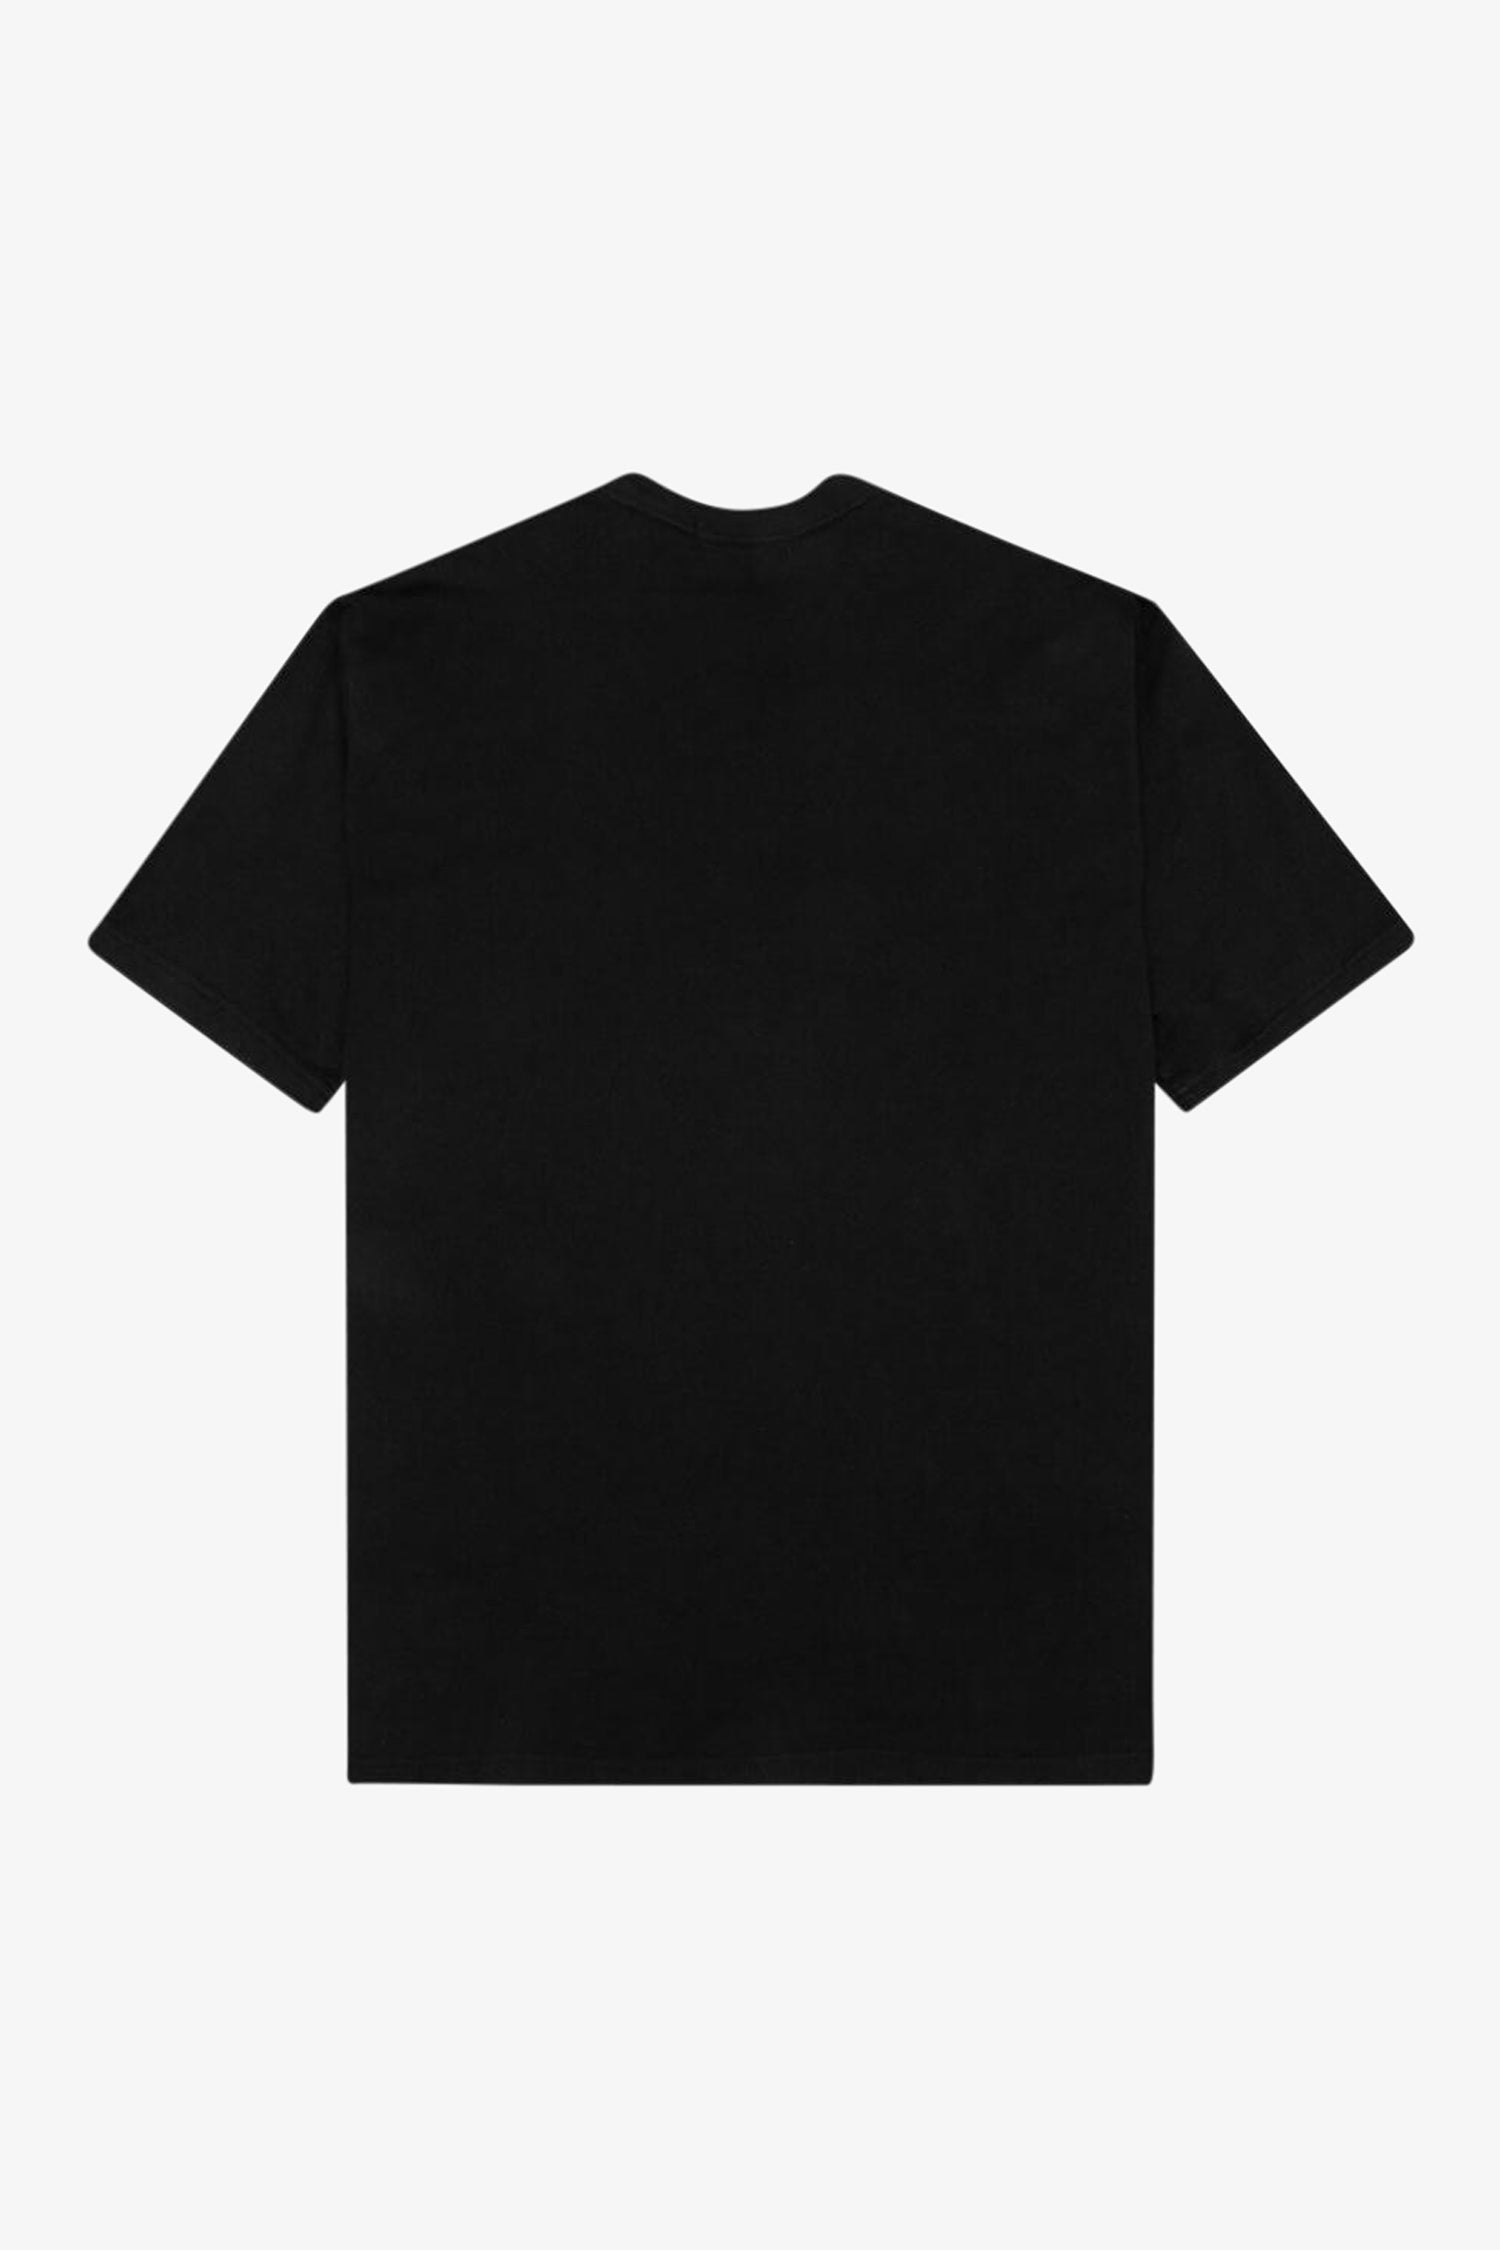 Selectshop FRAME - UNDERCOVER Heroes T-Shirt T-Shirt Dubai